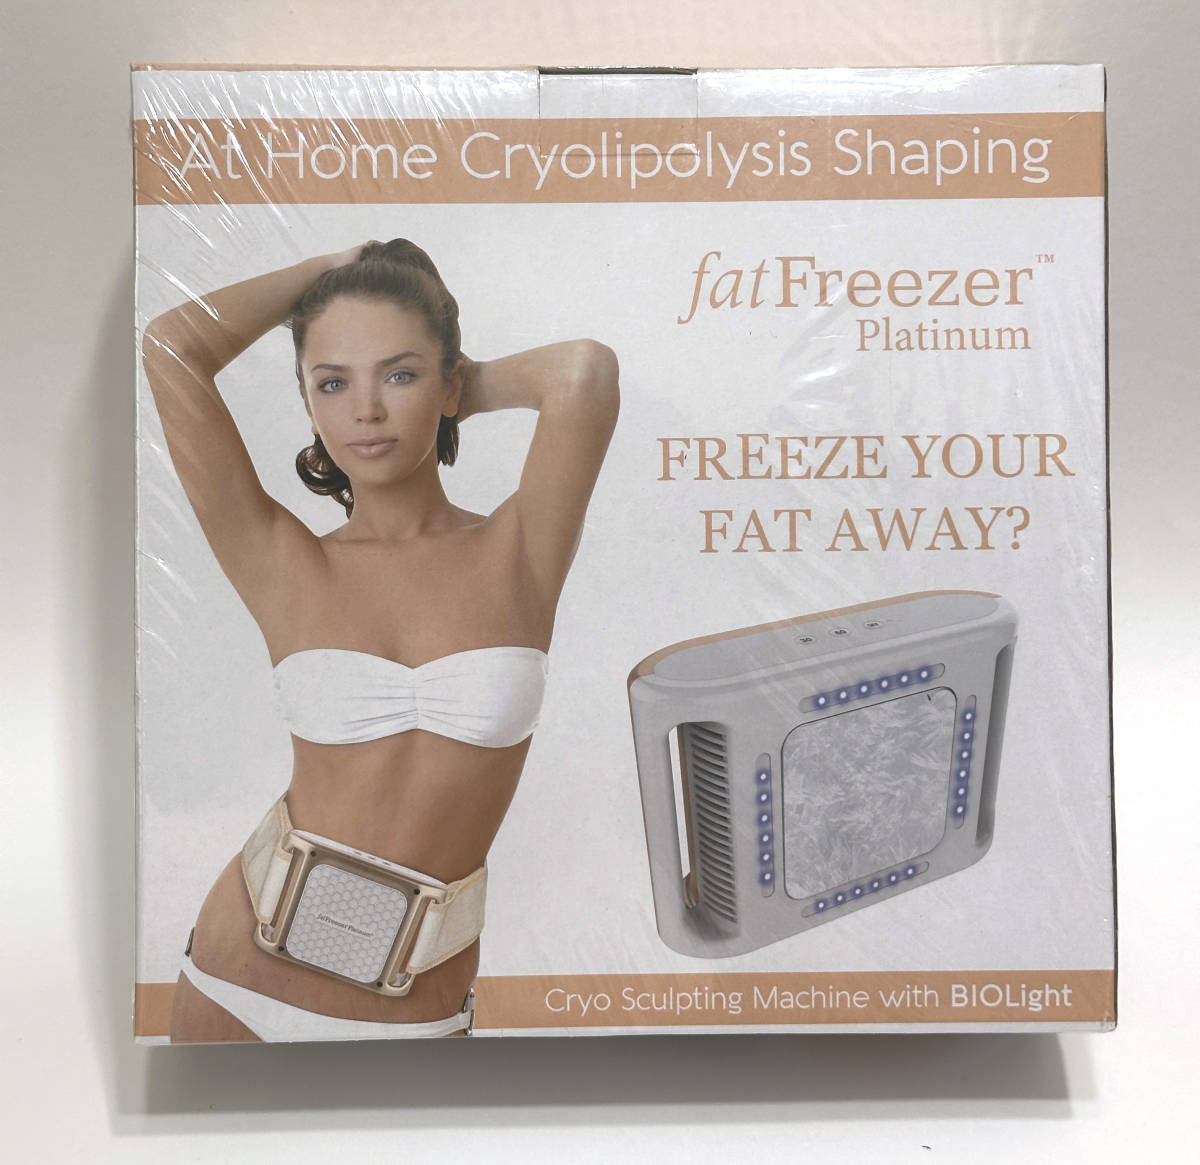 新品未使用 脂肪細胞 冷却破壊 痩身機 Fat Freezer Platinum 切らない脂肪吸引・皮下脂肪落とす細胞内凍結